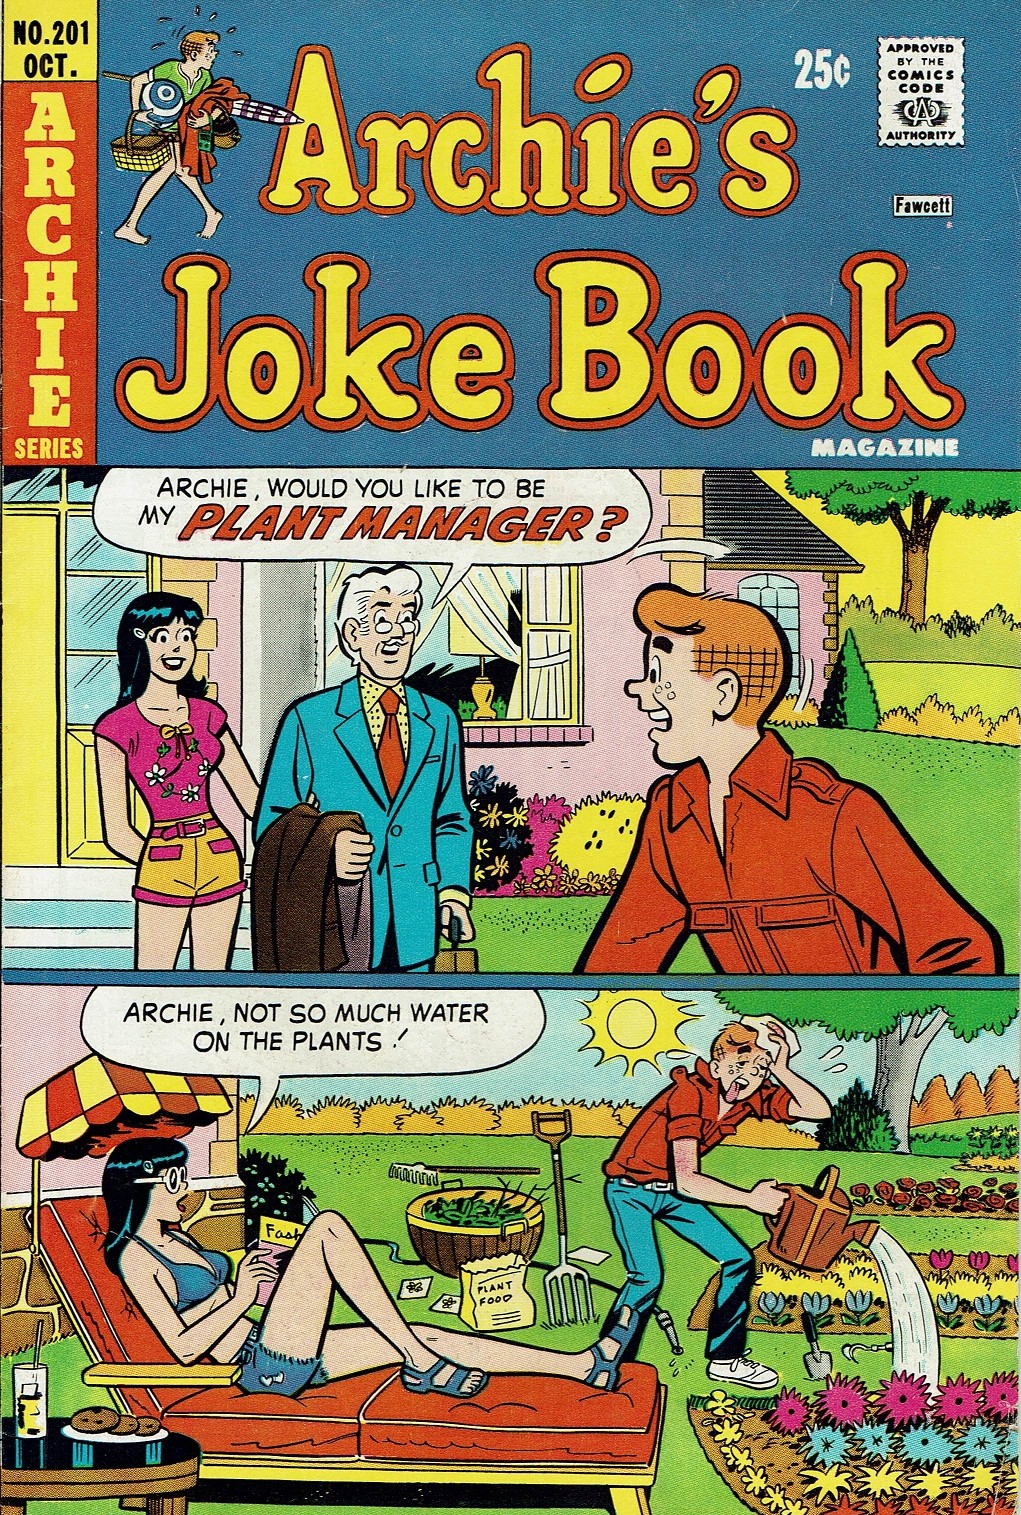 Read online Archie's Joke Book Magazine comic -  Issue #201 - 1